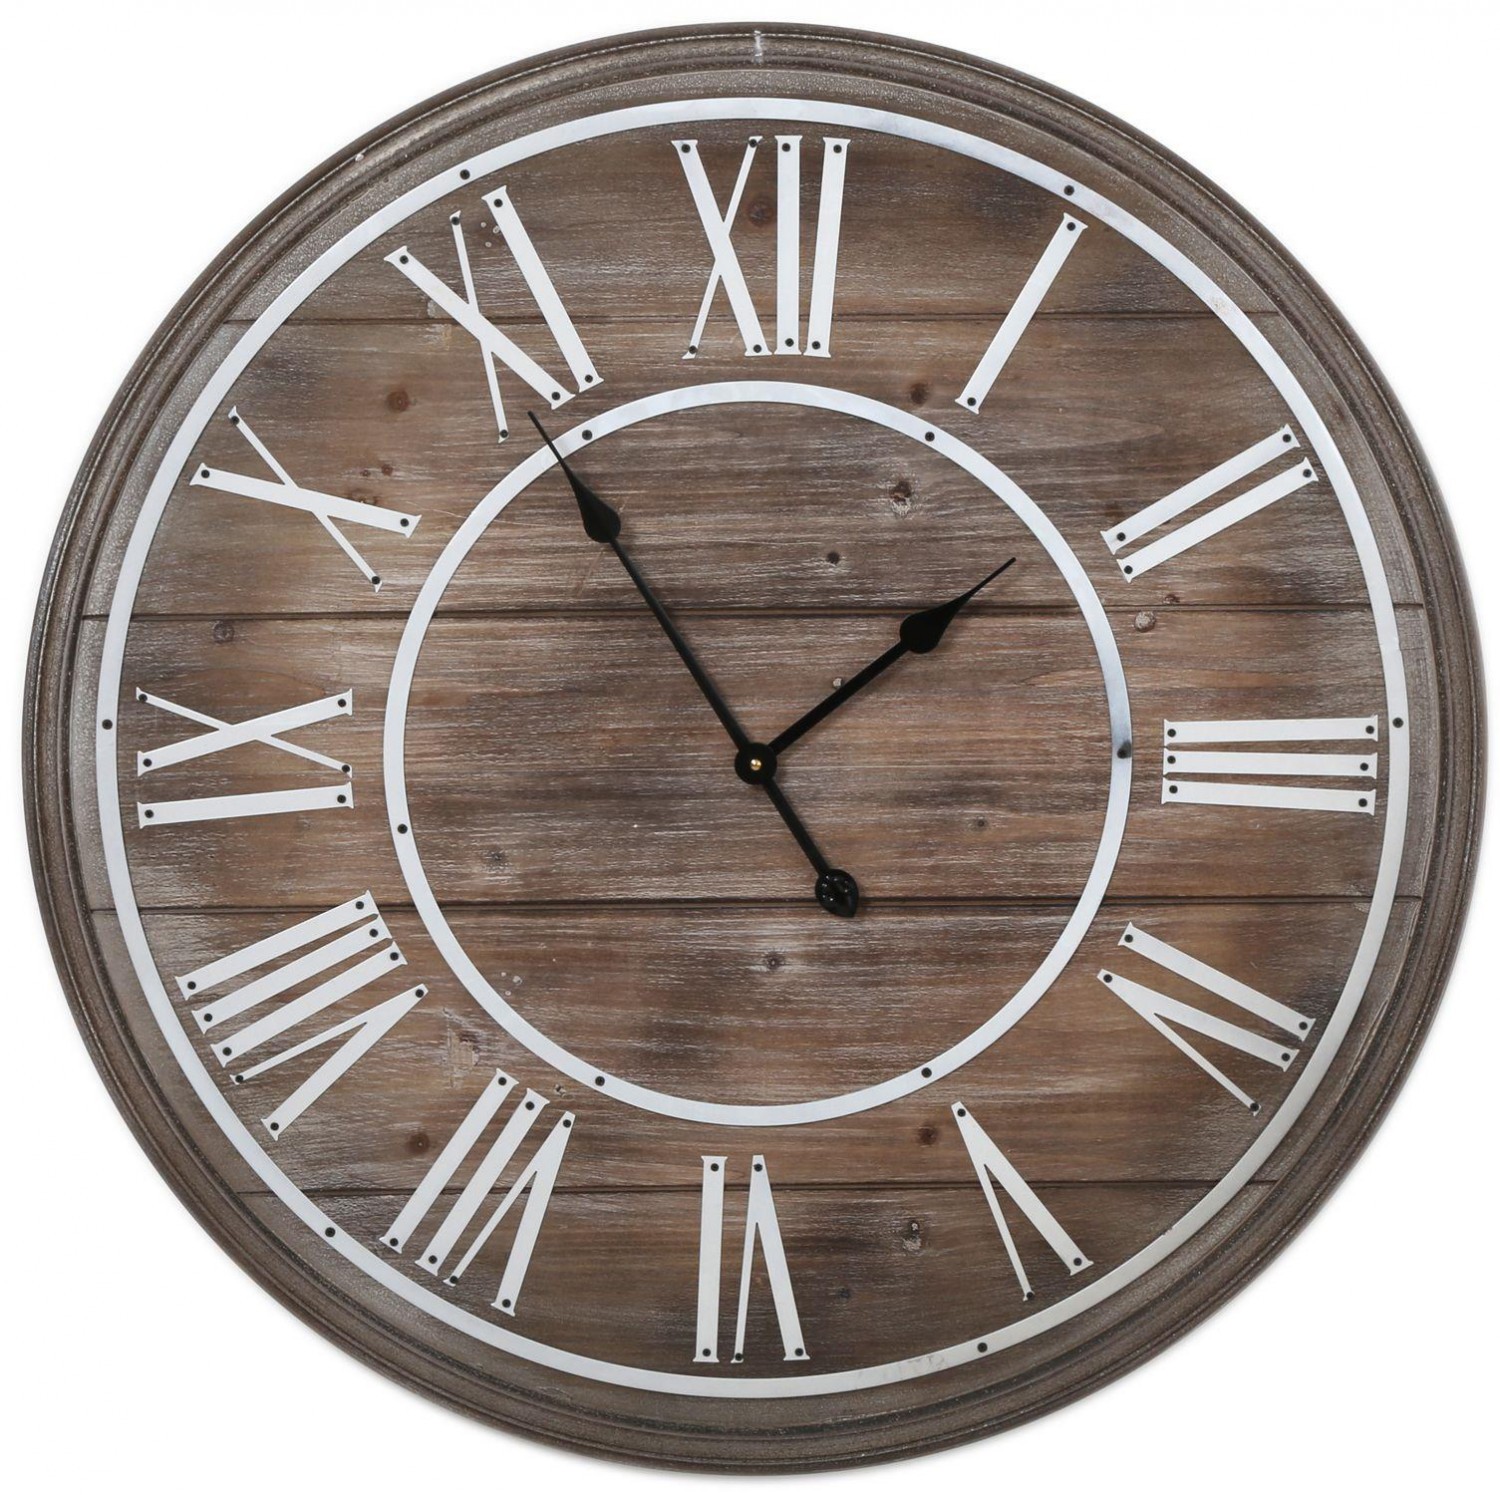 Stunning shabby chic wooden wall clock 80cm